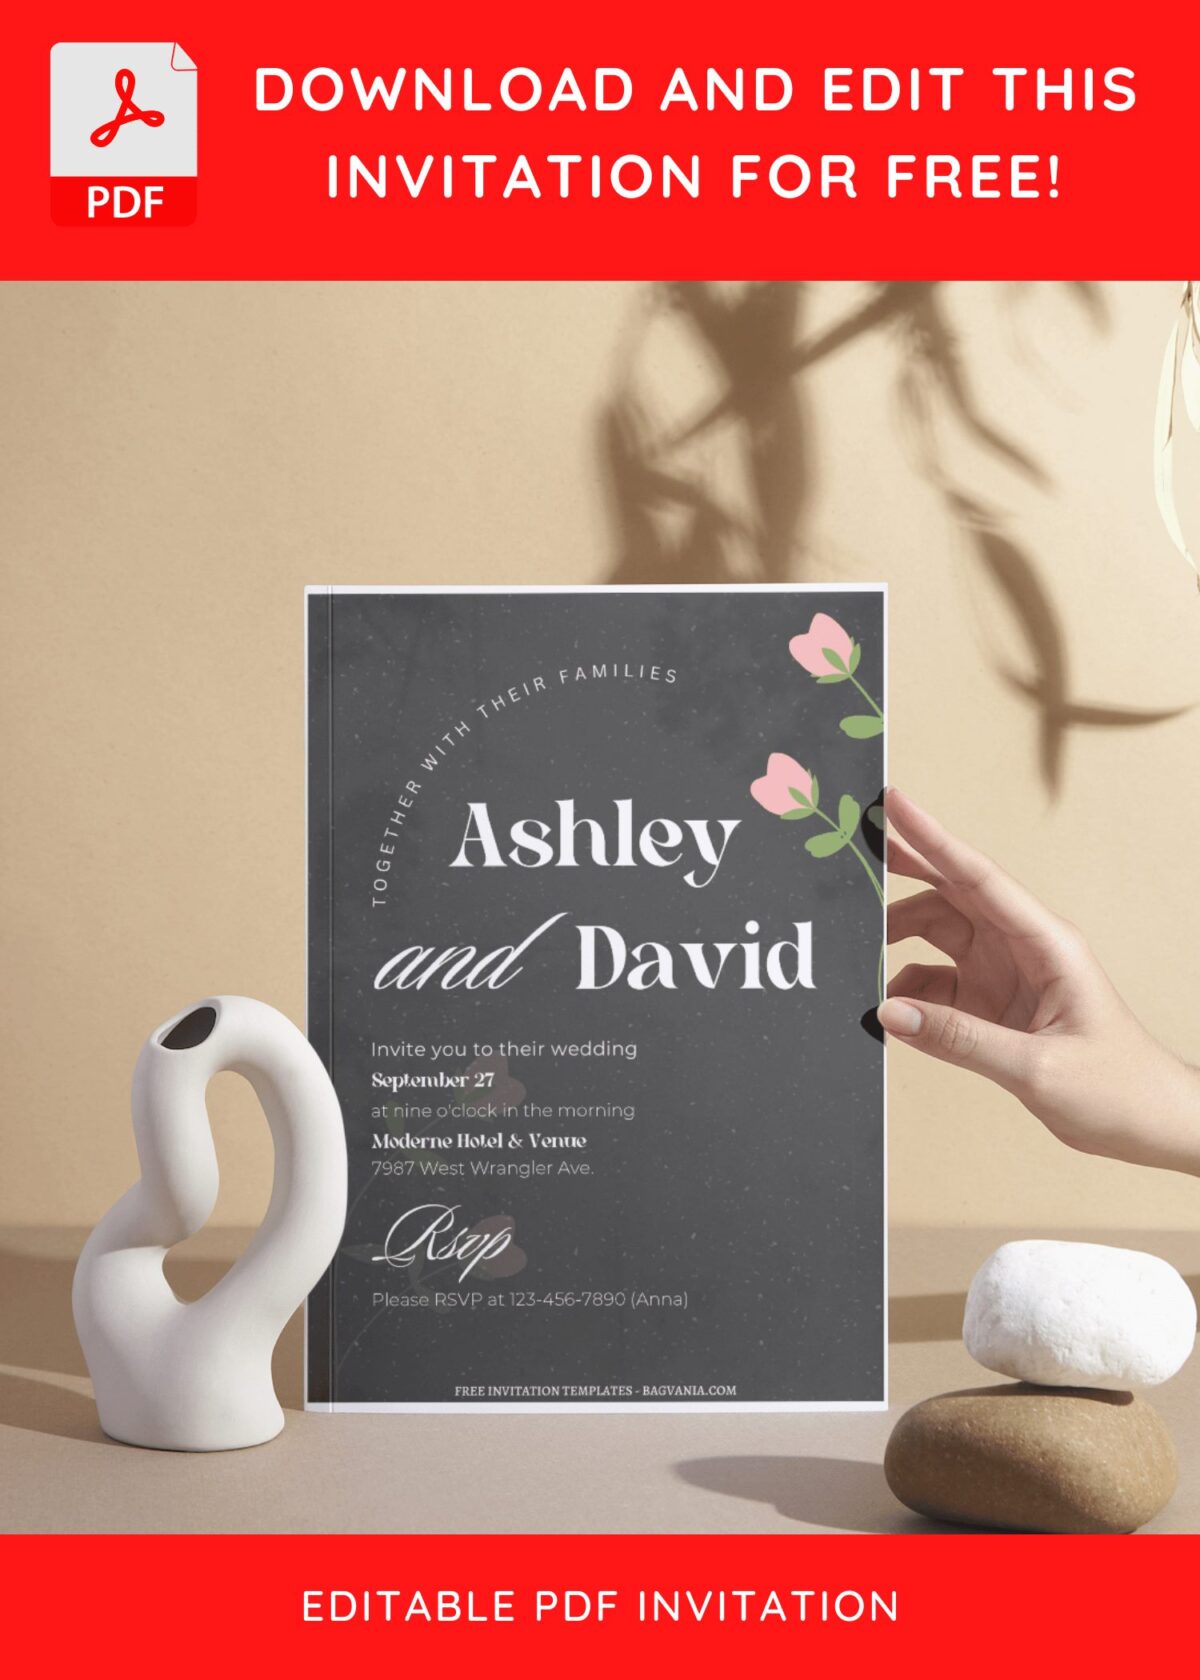 (Free Editable PDF) Modern Minimalist Typography Wedding Invitation Templates I